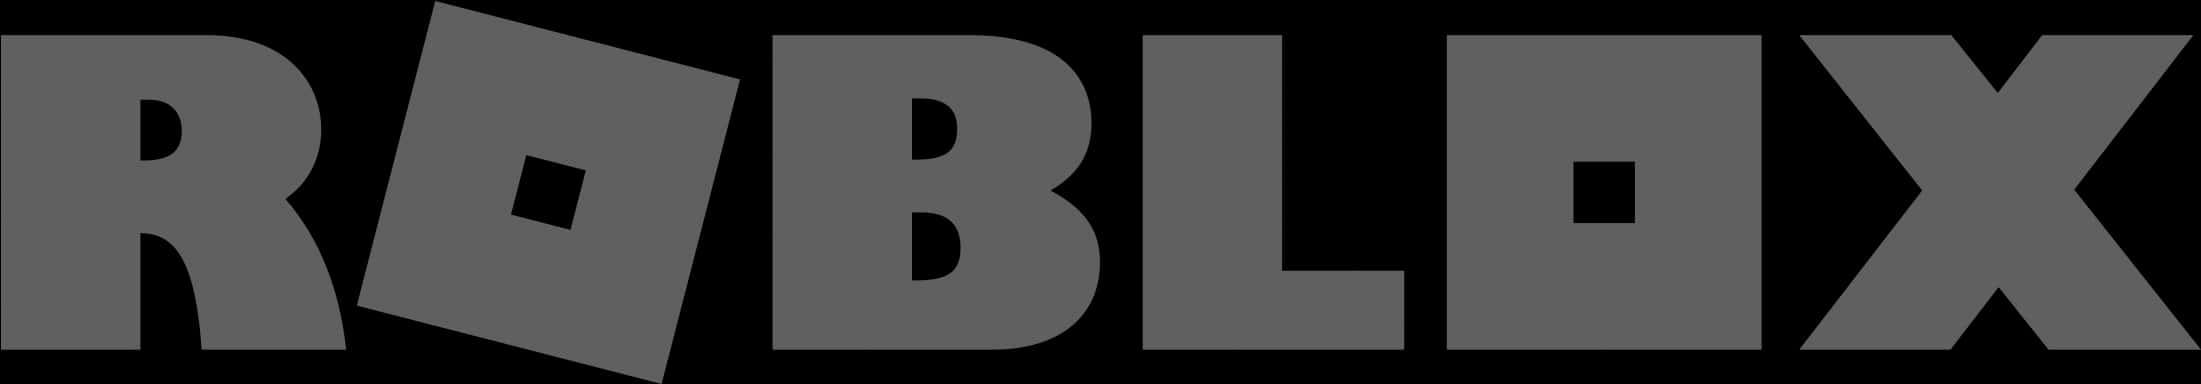 Roblox Logo Blackand White PNG image